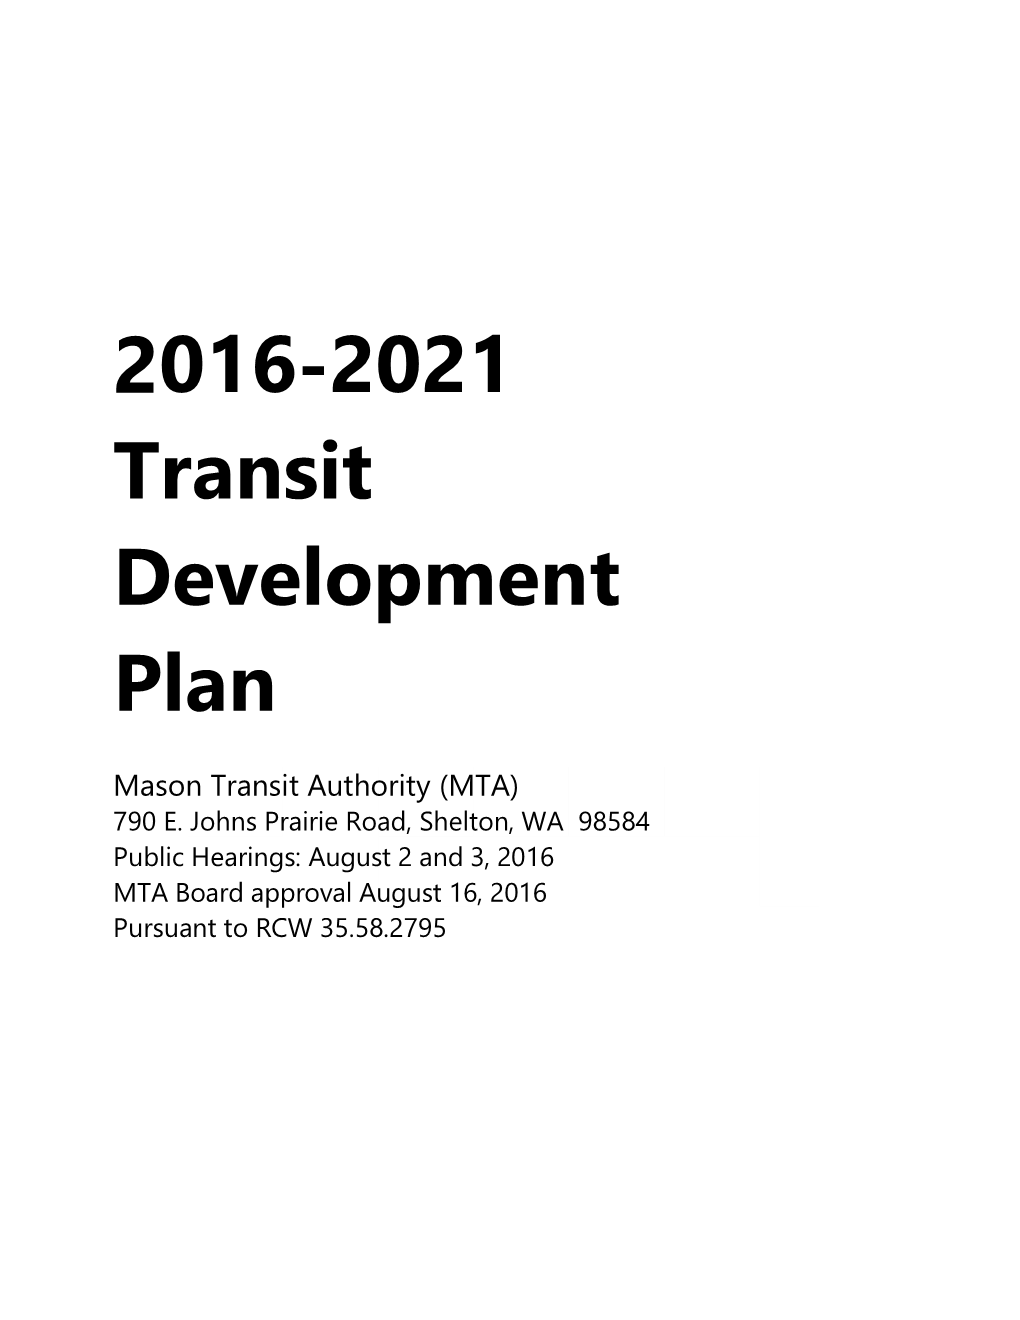 2016-2021 Transit Development Plan